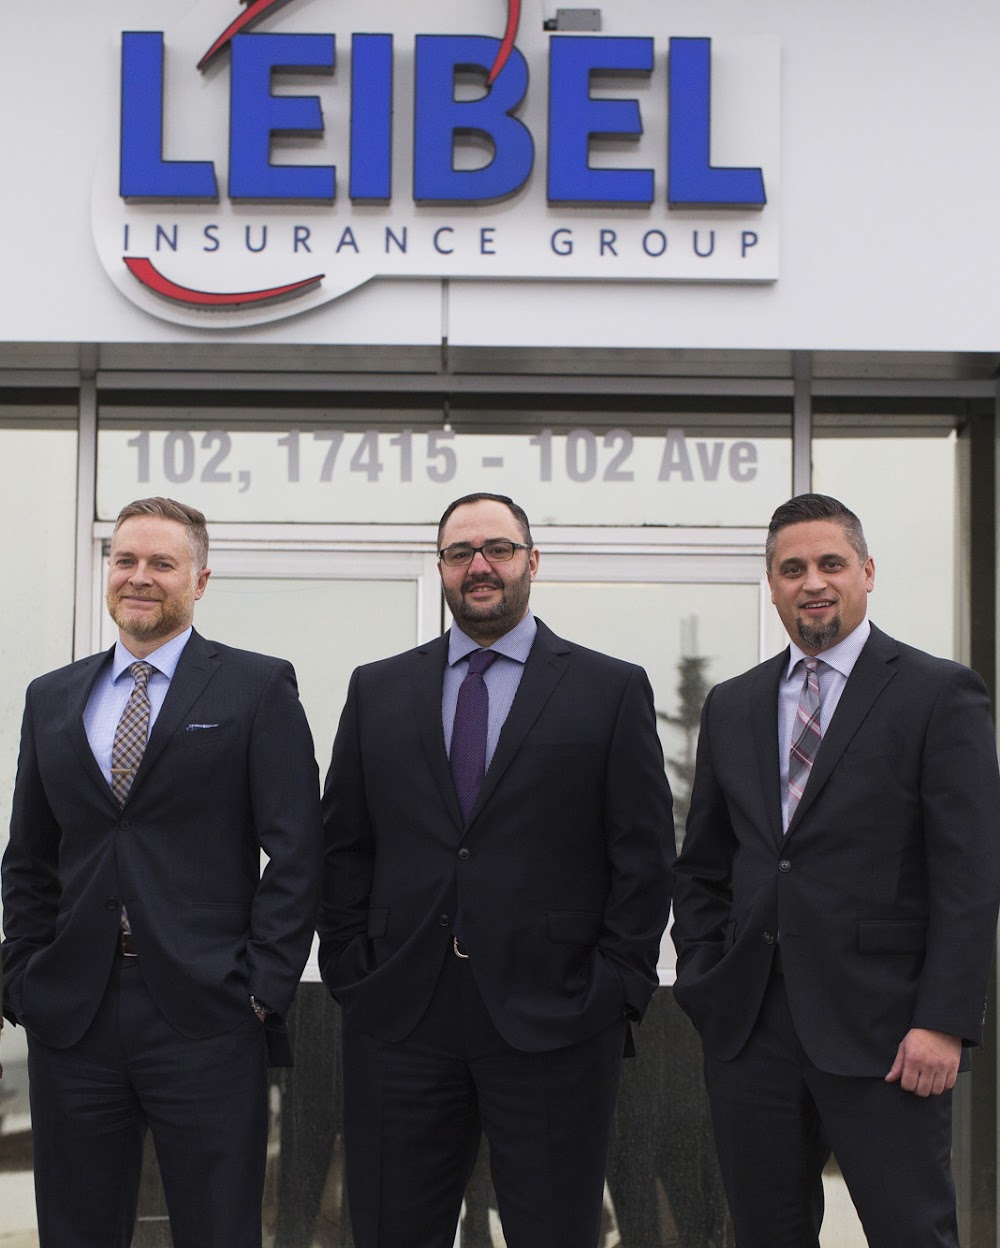 Leibel Insurance Group